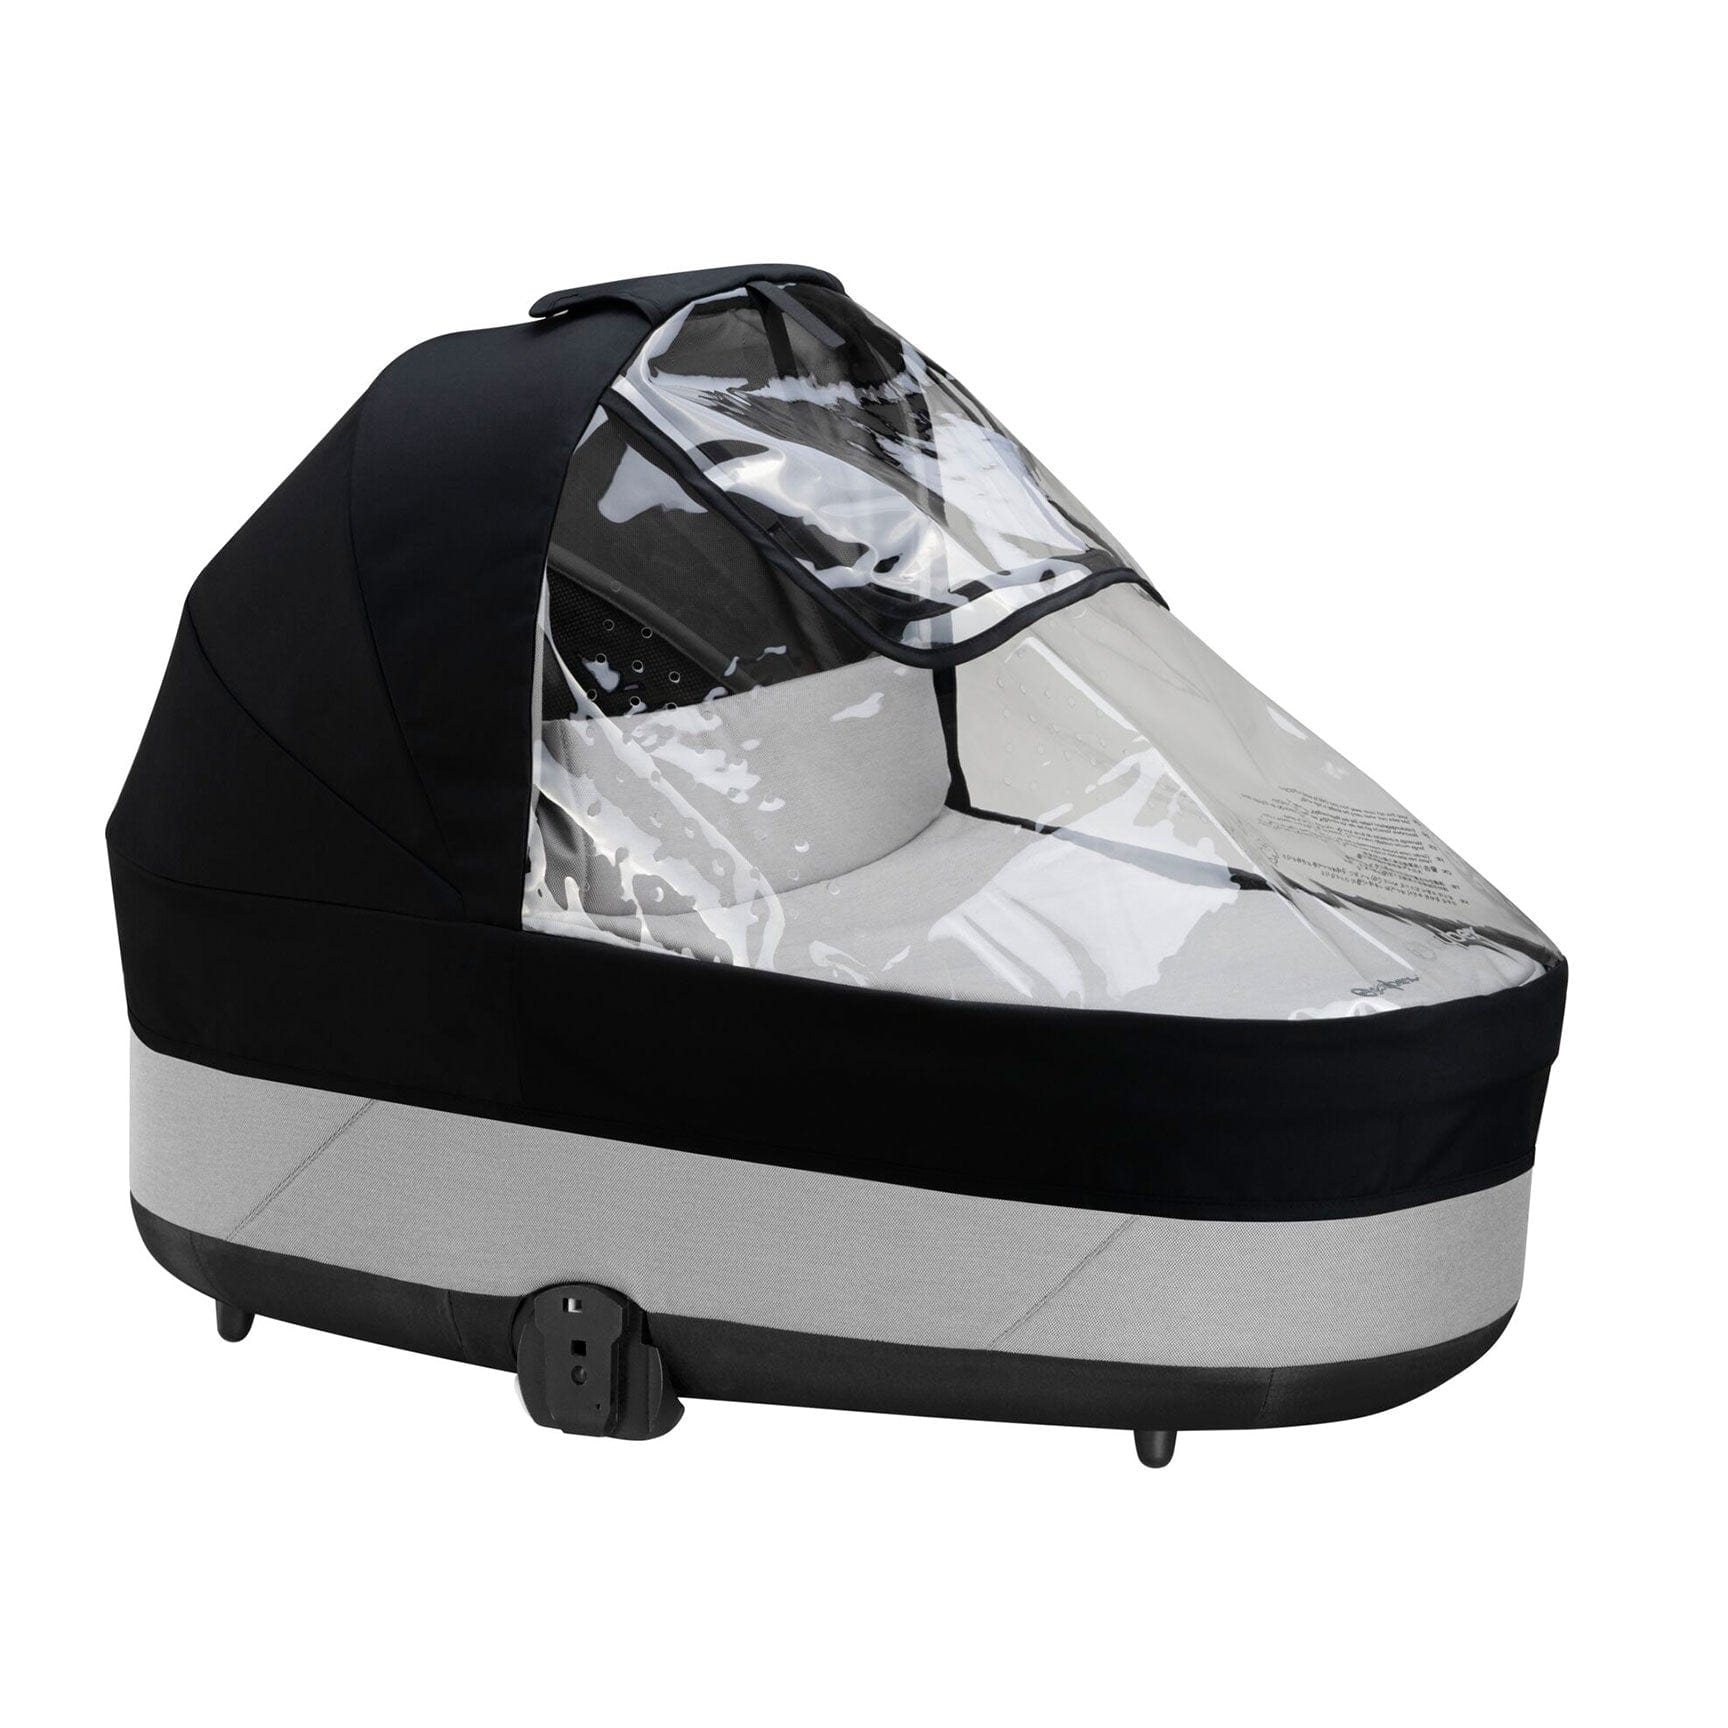 Cybex Baby Strollers Cybex Balios S Lux Essential Bundle - Black/Moon Black 12743-BLK-MOO-BLK